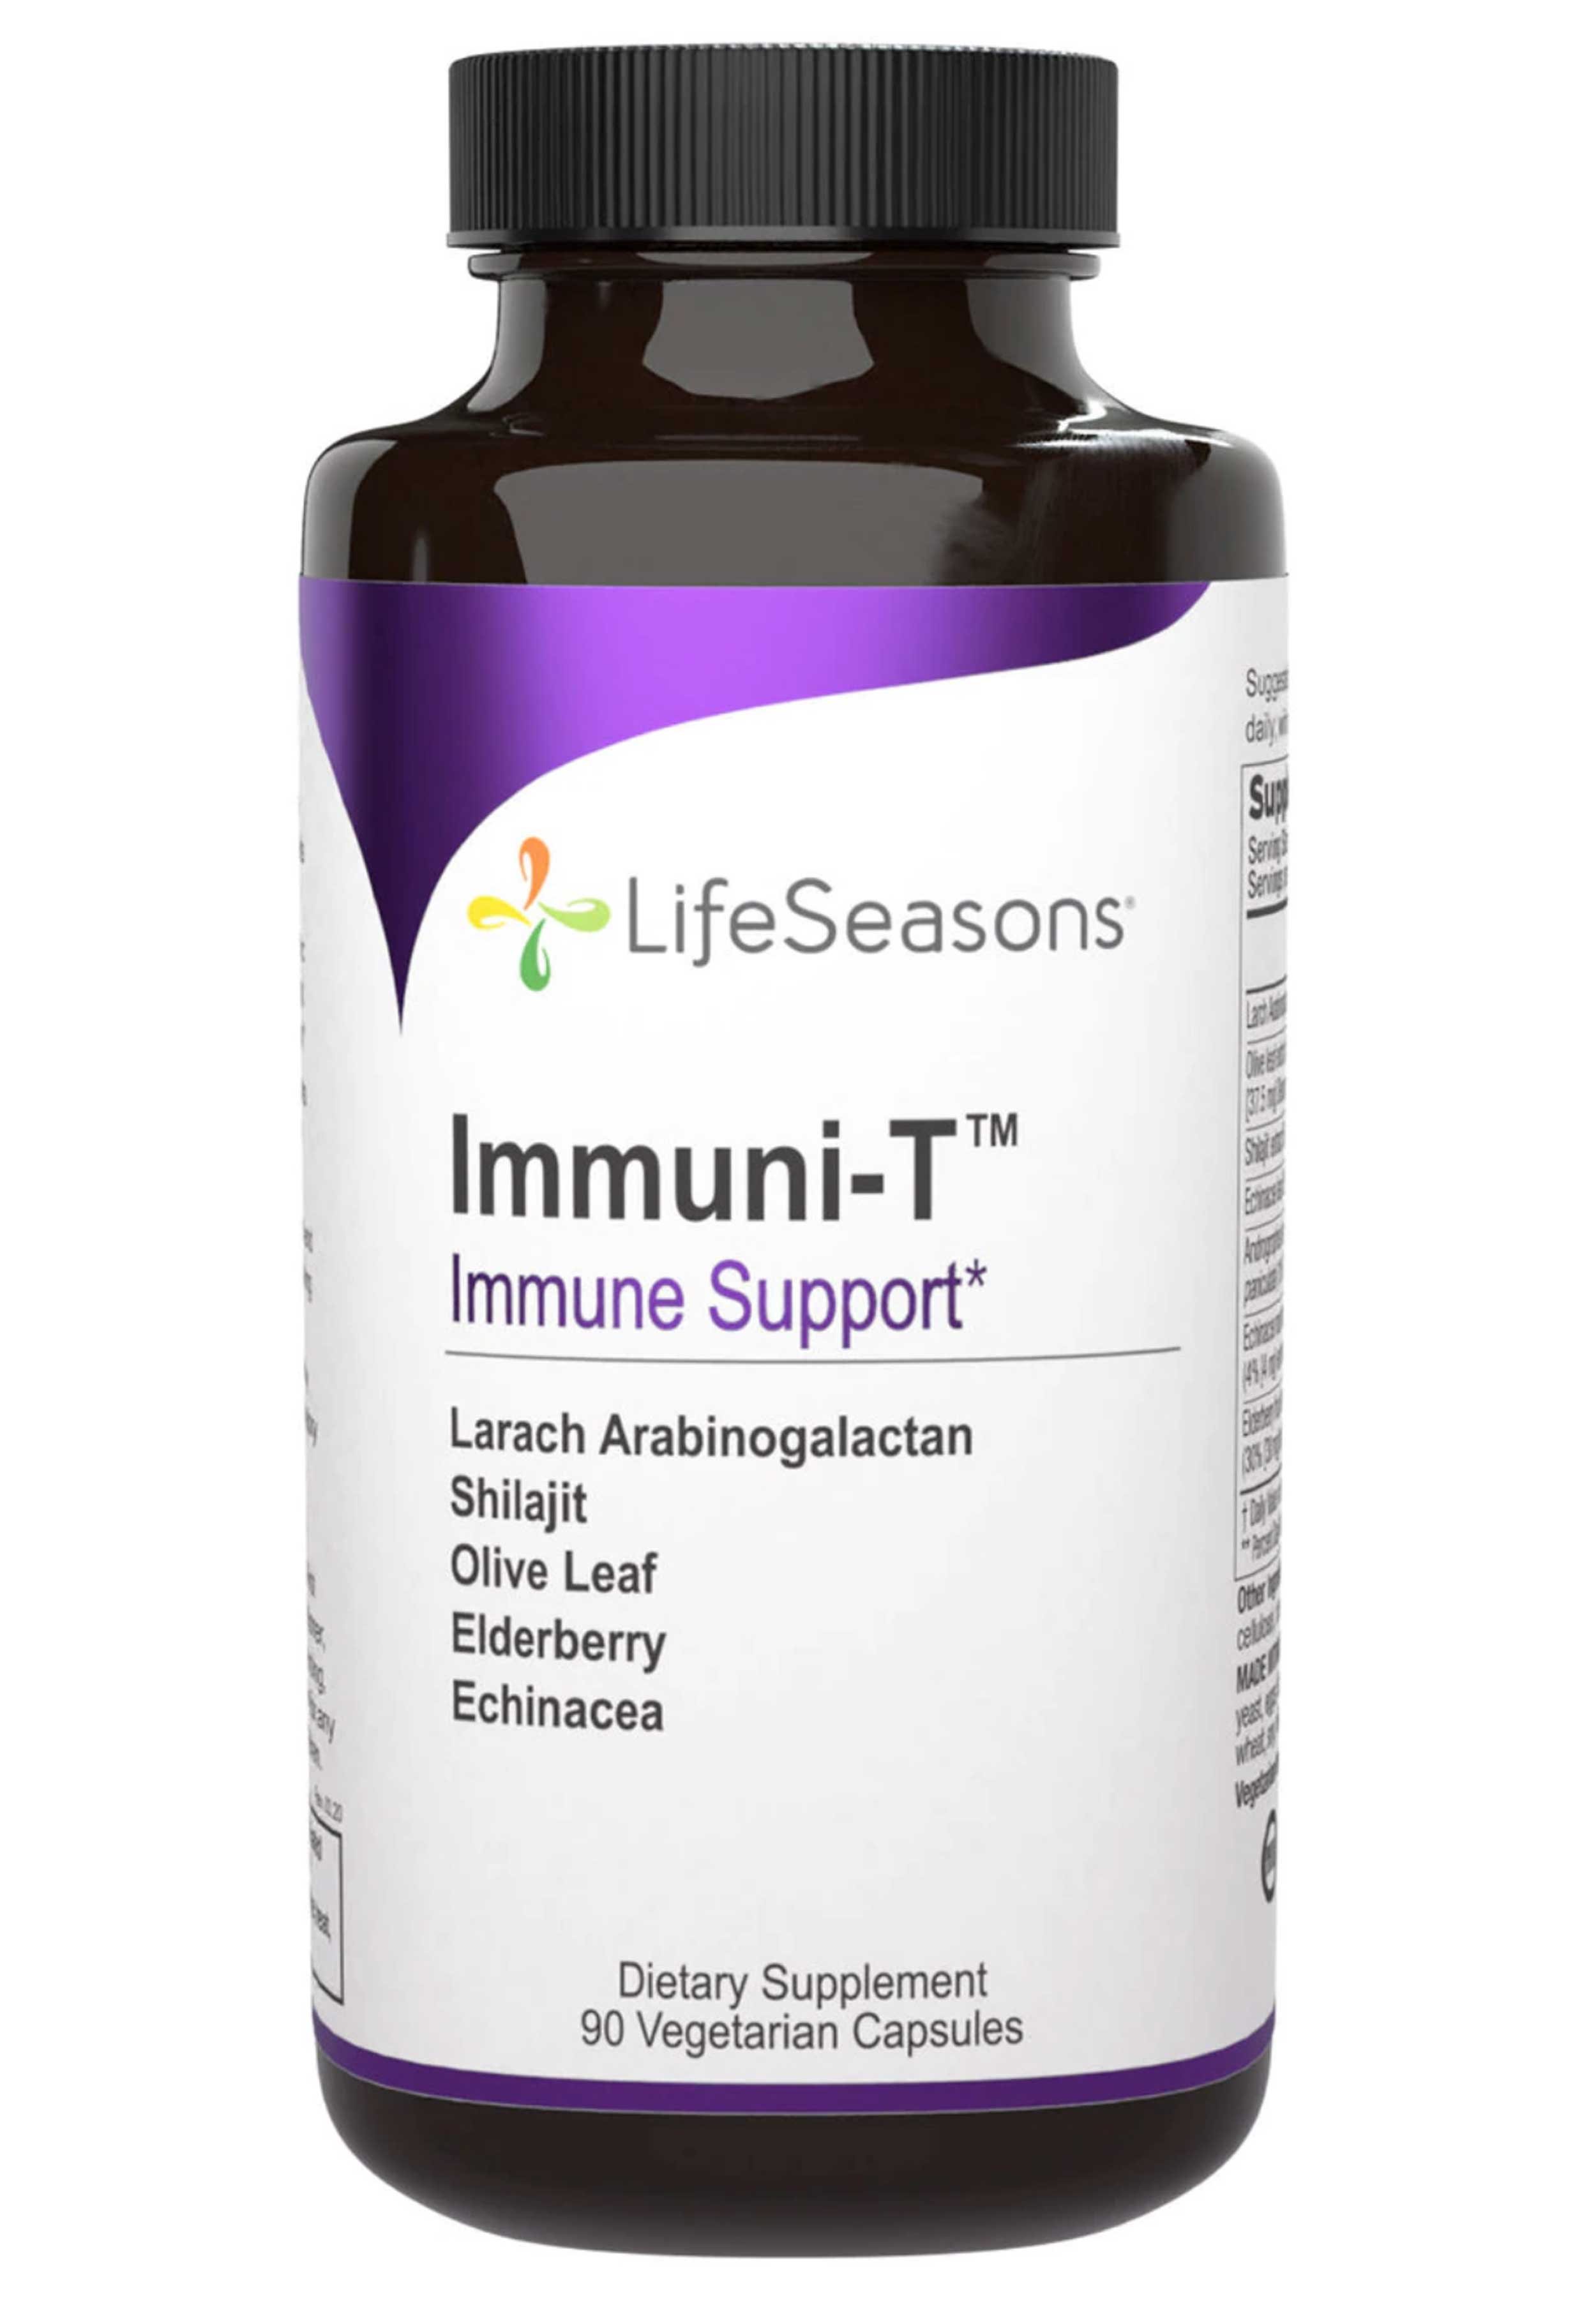 LifeSeasons Immuni-T